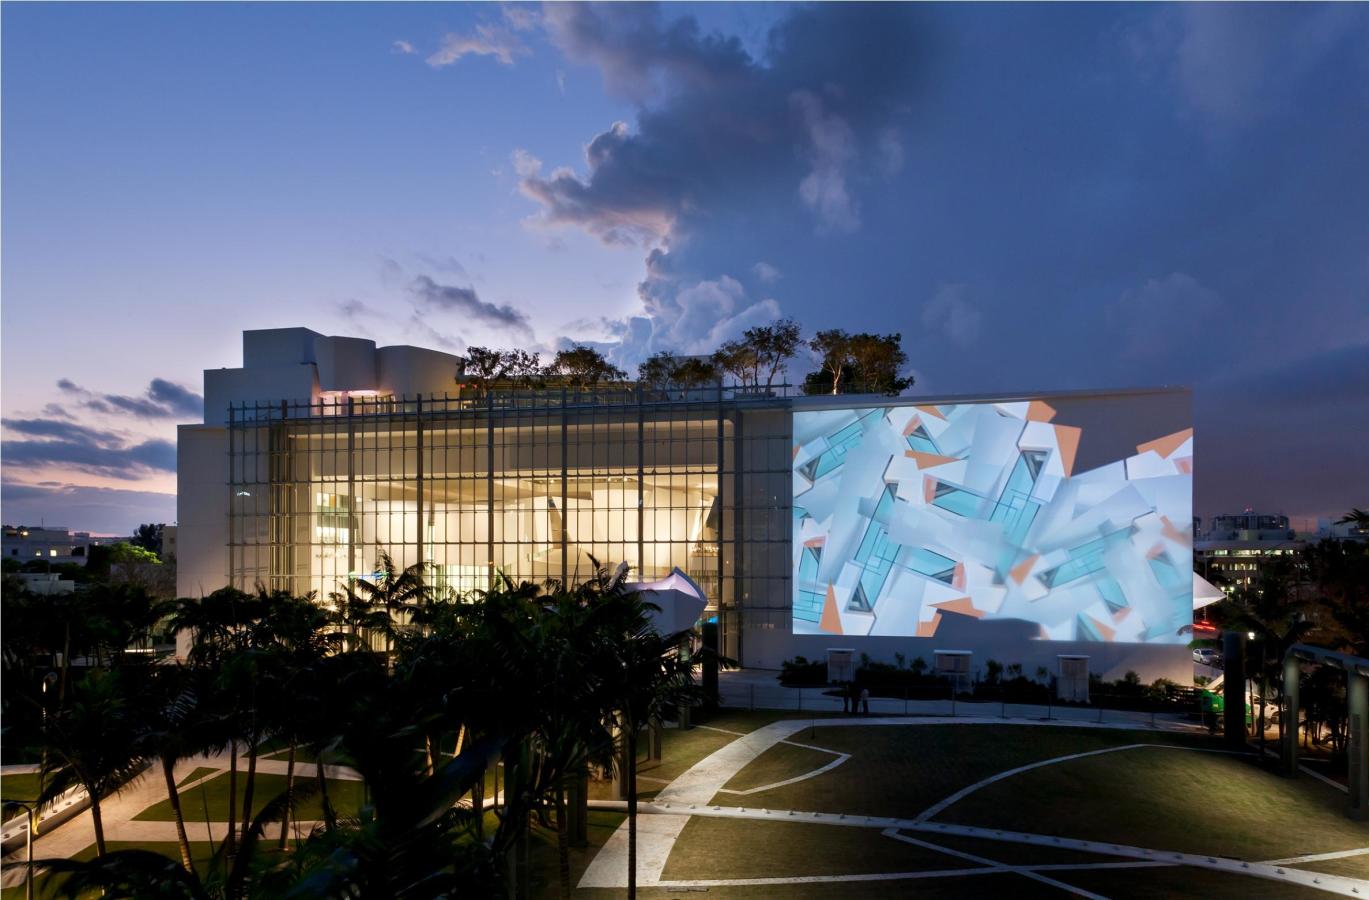 New World Center e video mural "Cronógrafo" - foto de Claudia Uribe